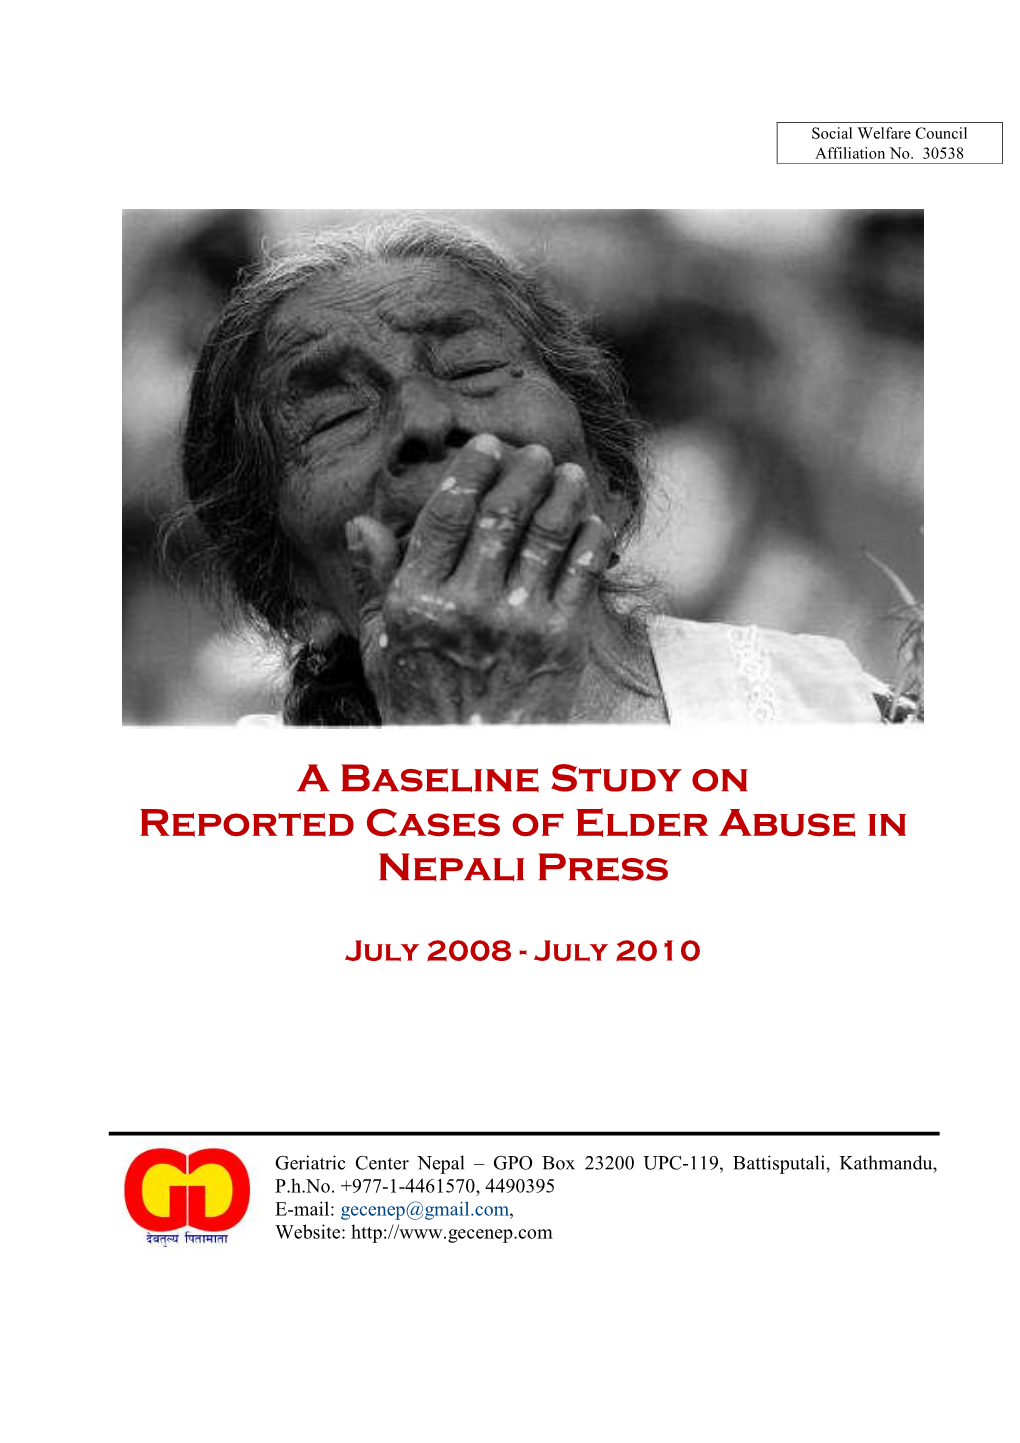 Baseline Study on Elder Abuse Reported in Nepali Press